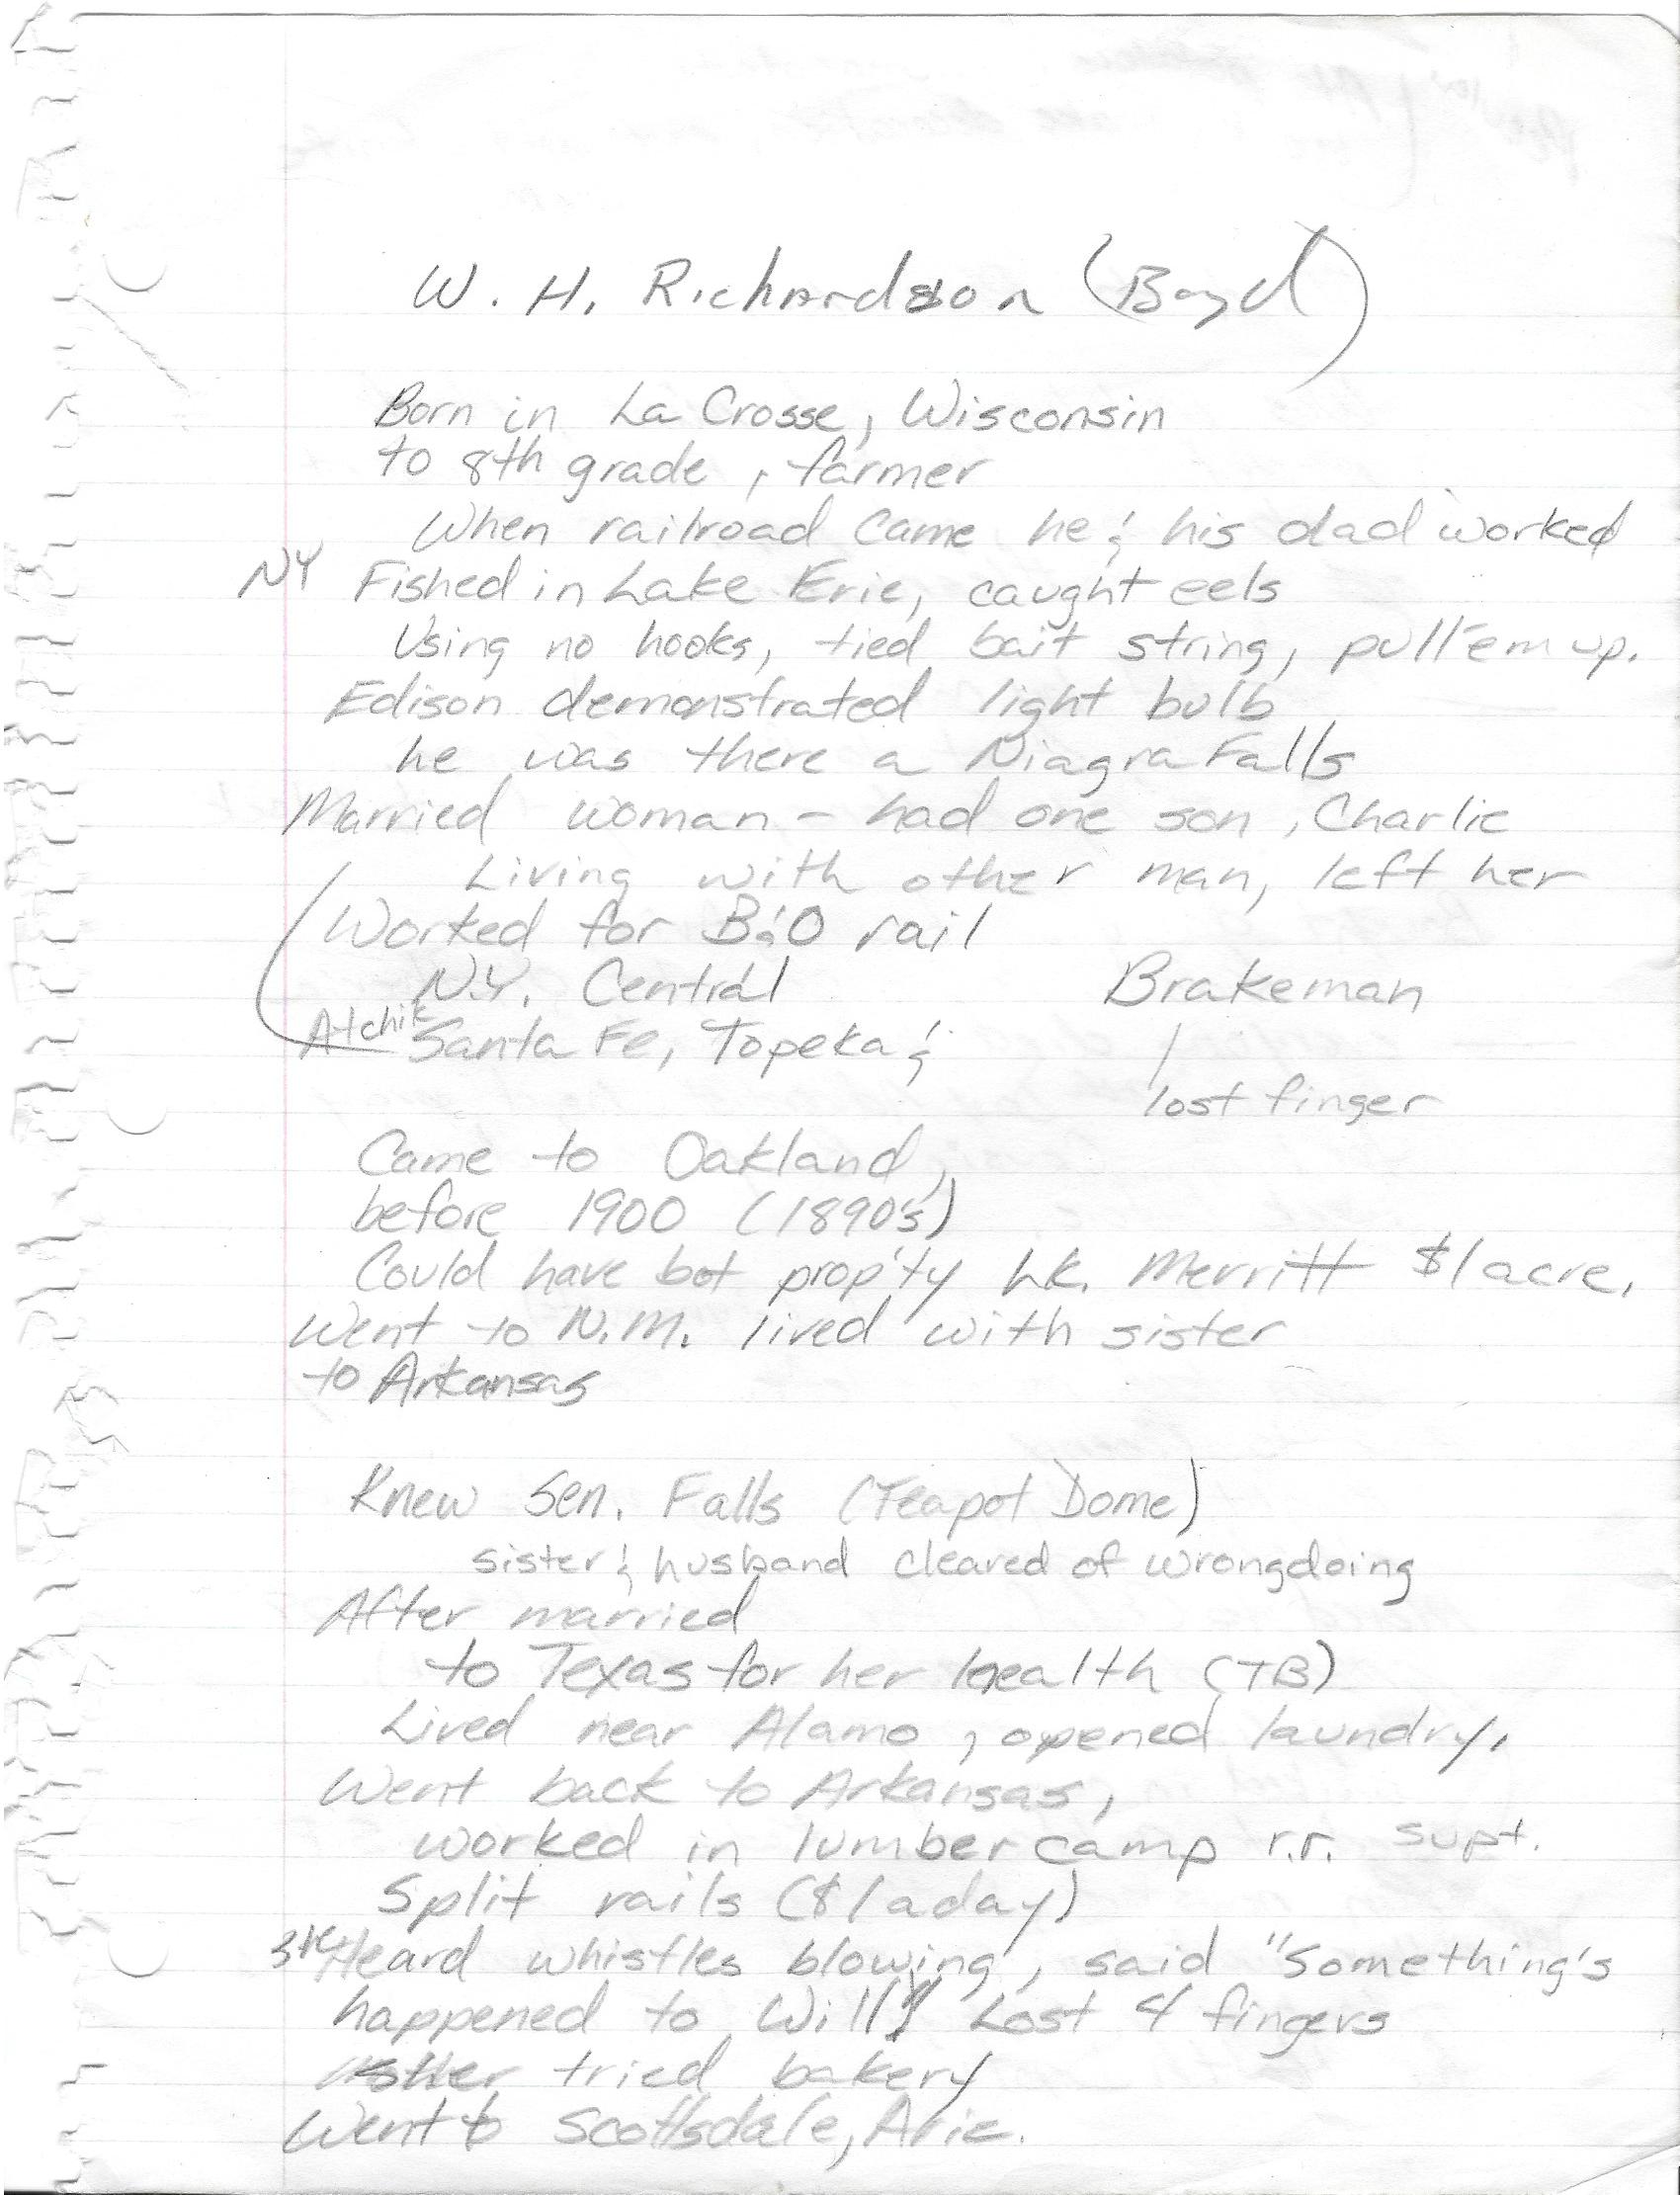 Handwritten notes about W. H. Richardson (Boyd)